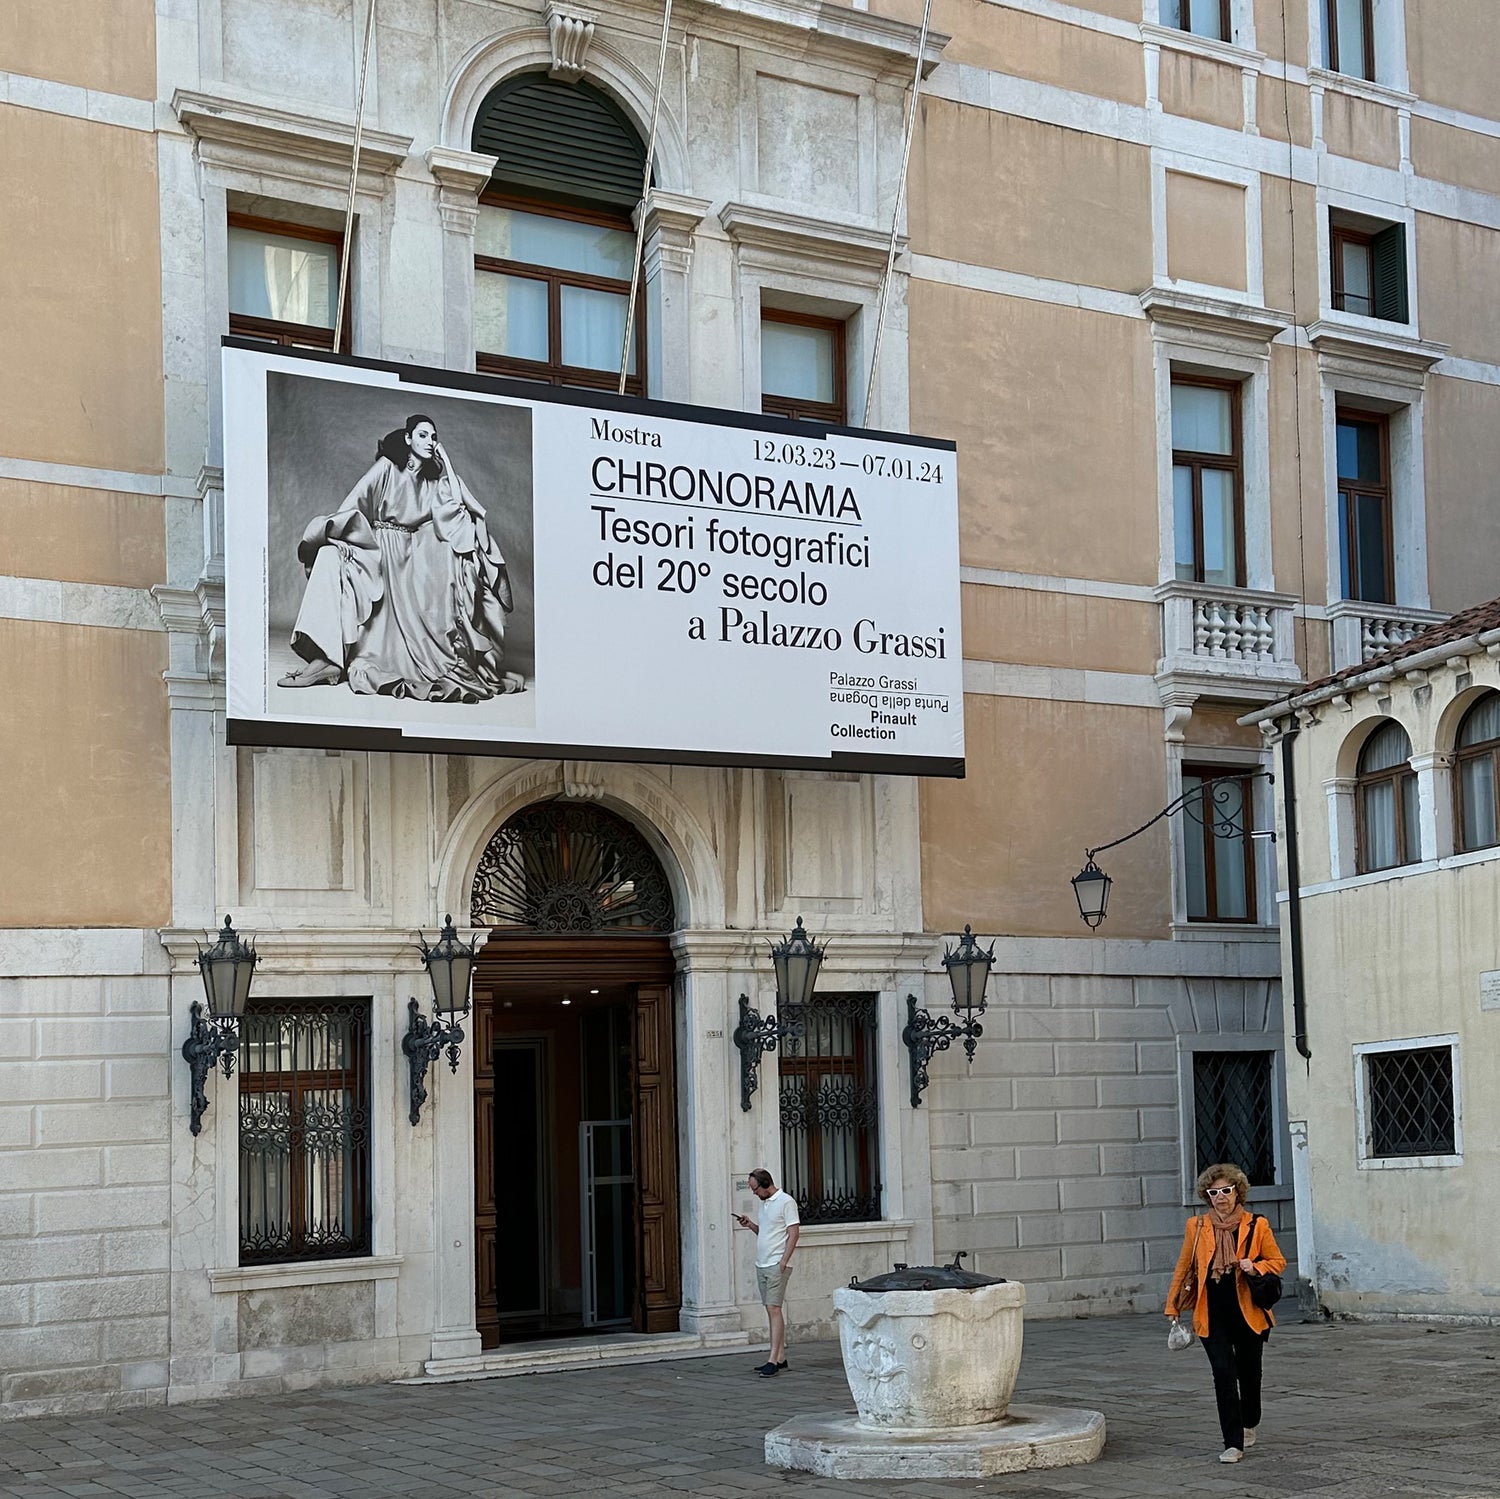 CHRONORAMA at Palazzo Grassi, Venice